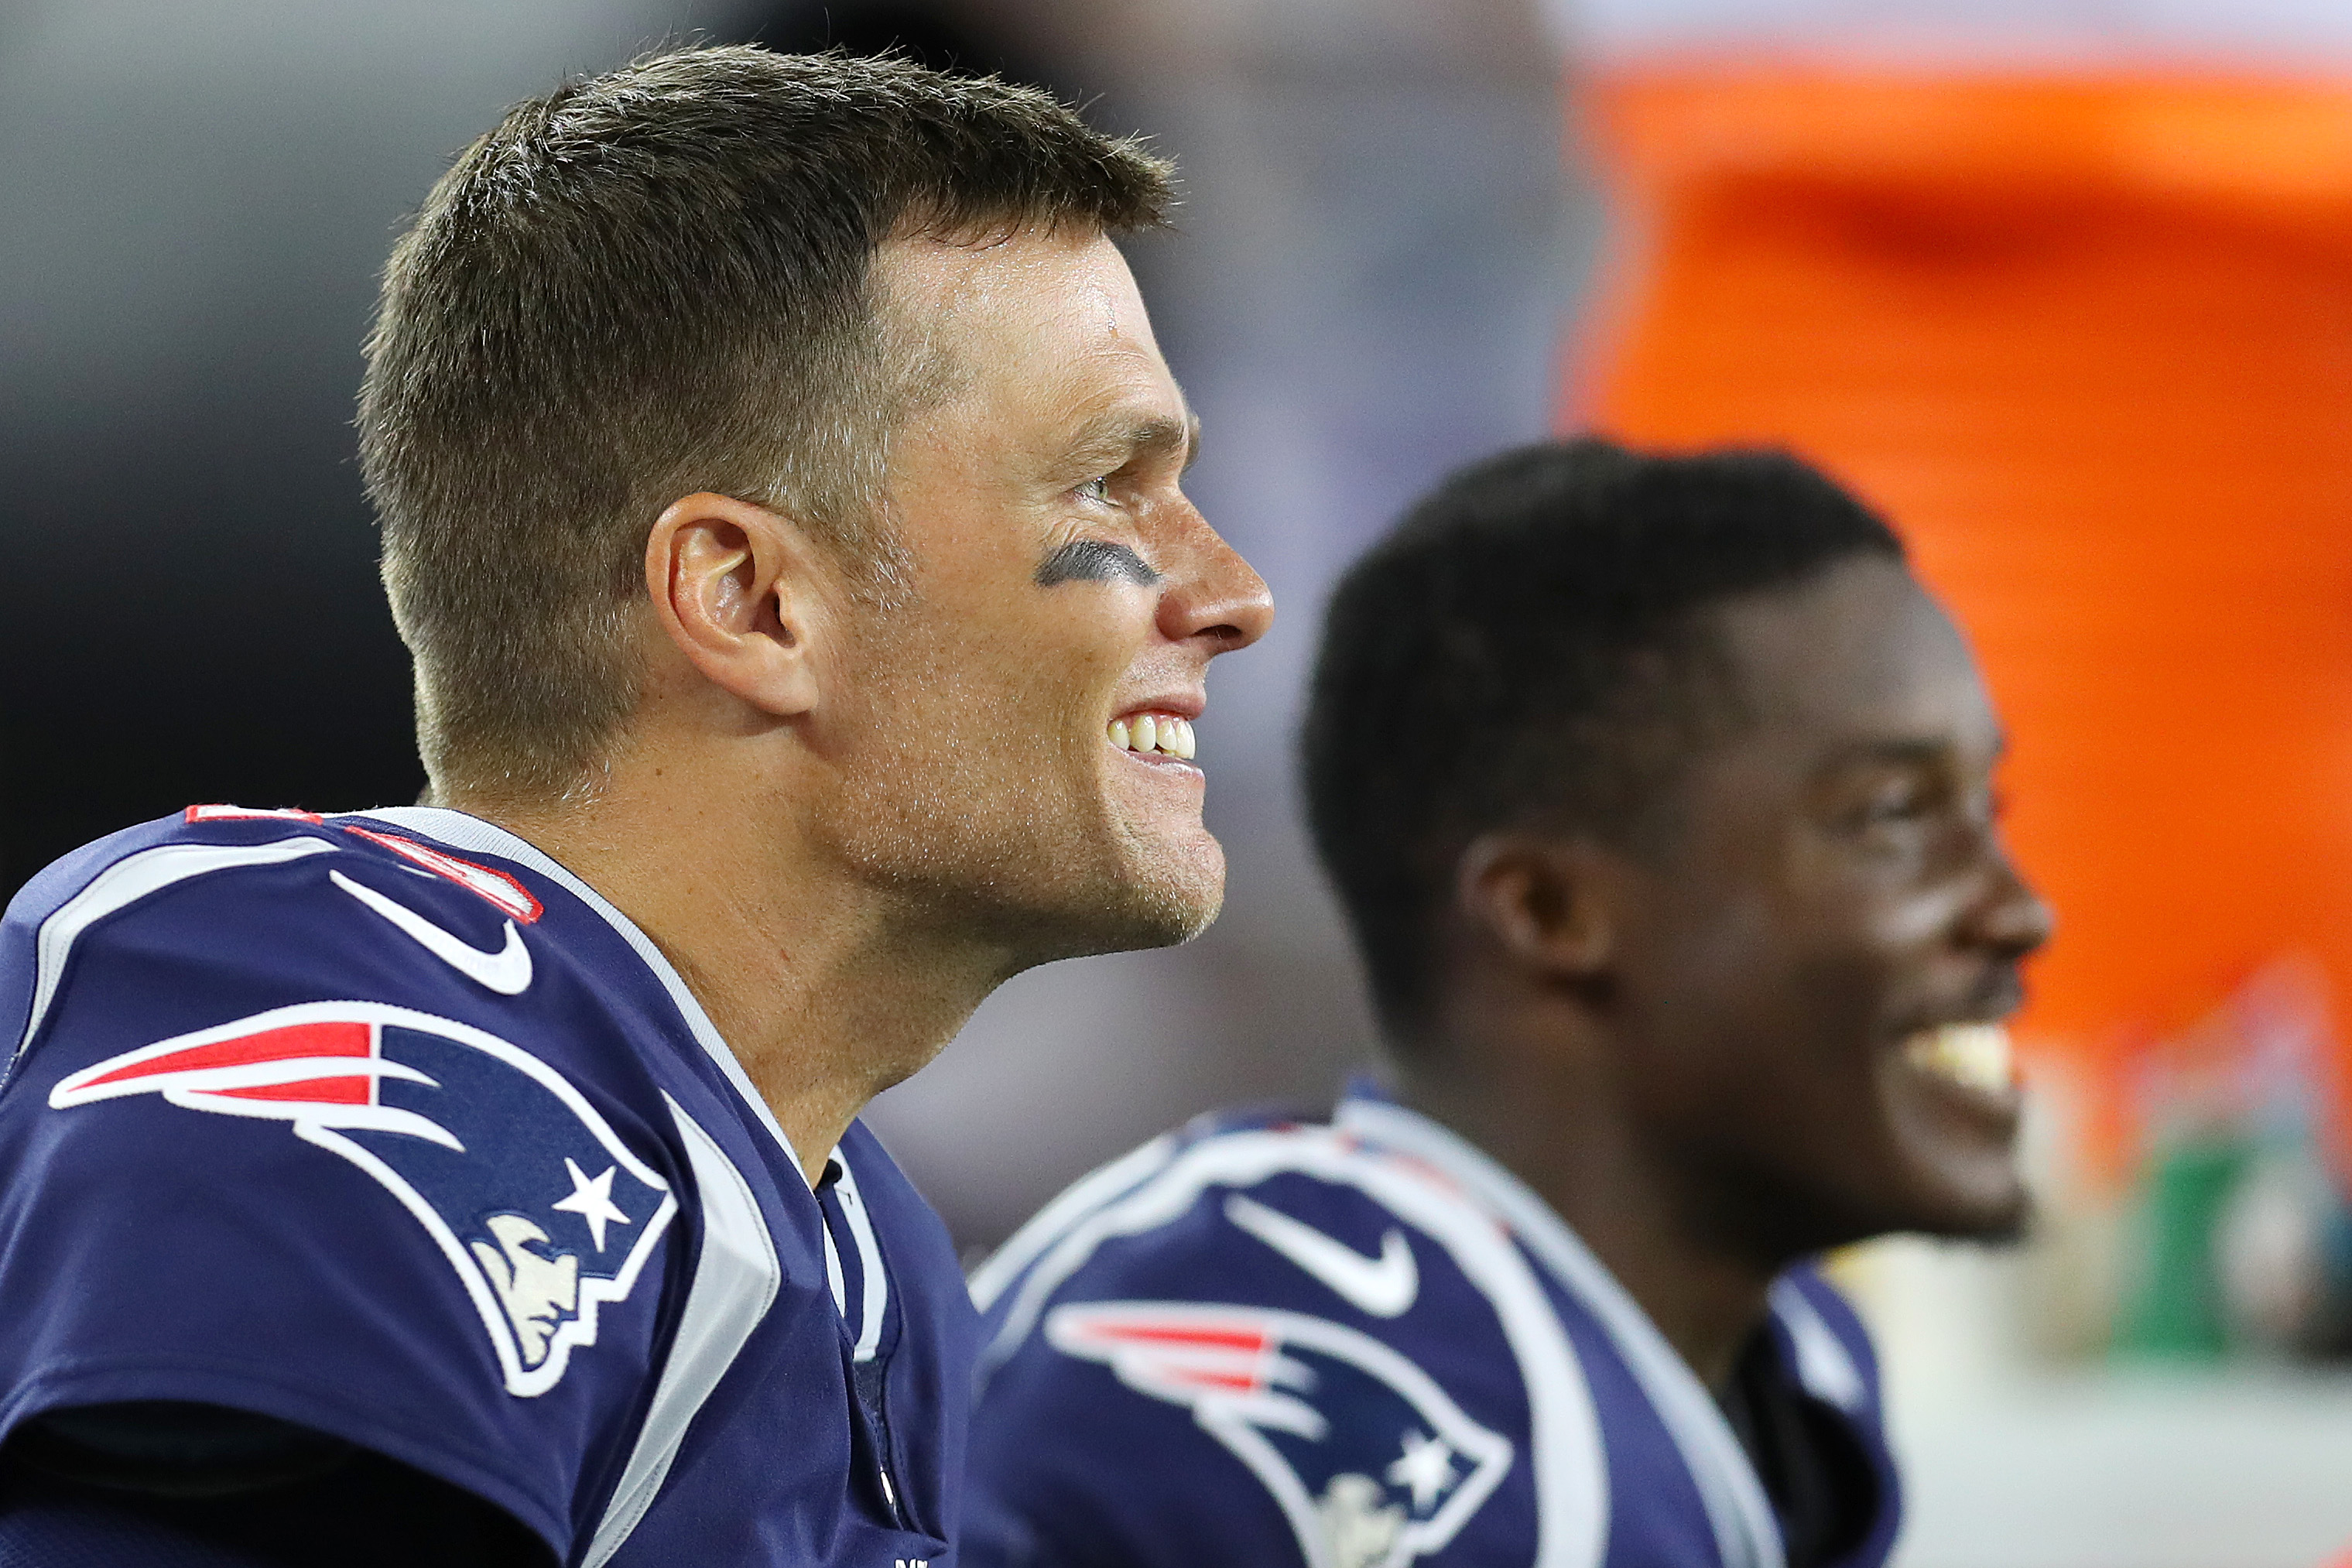 Tom Brady of the New England Patriots laughs